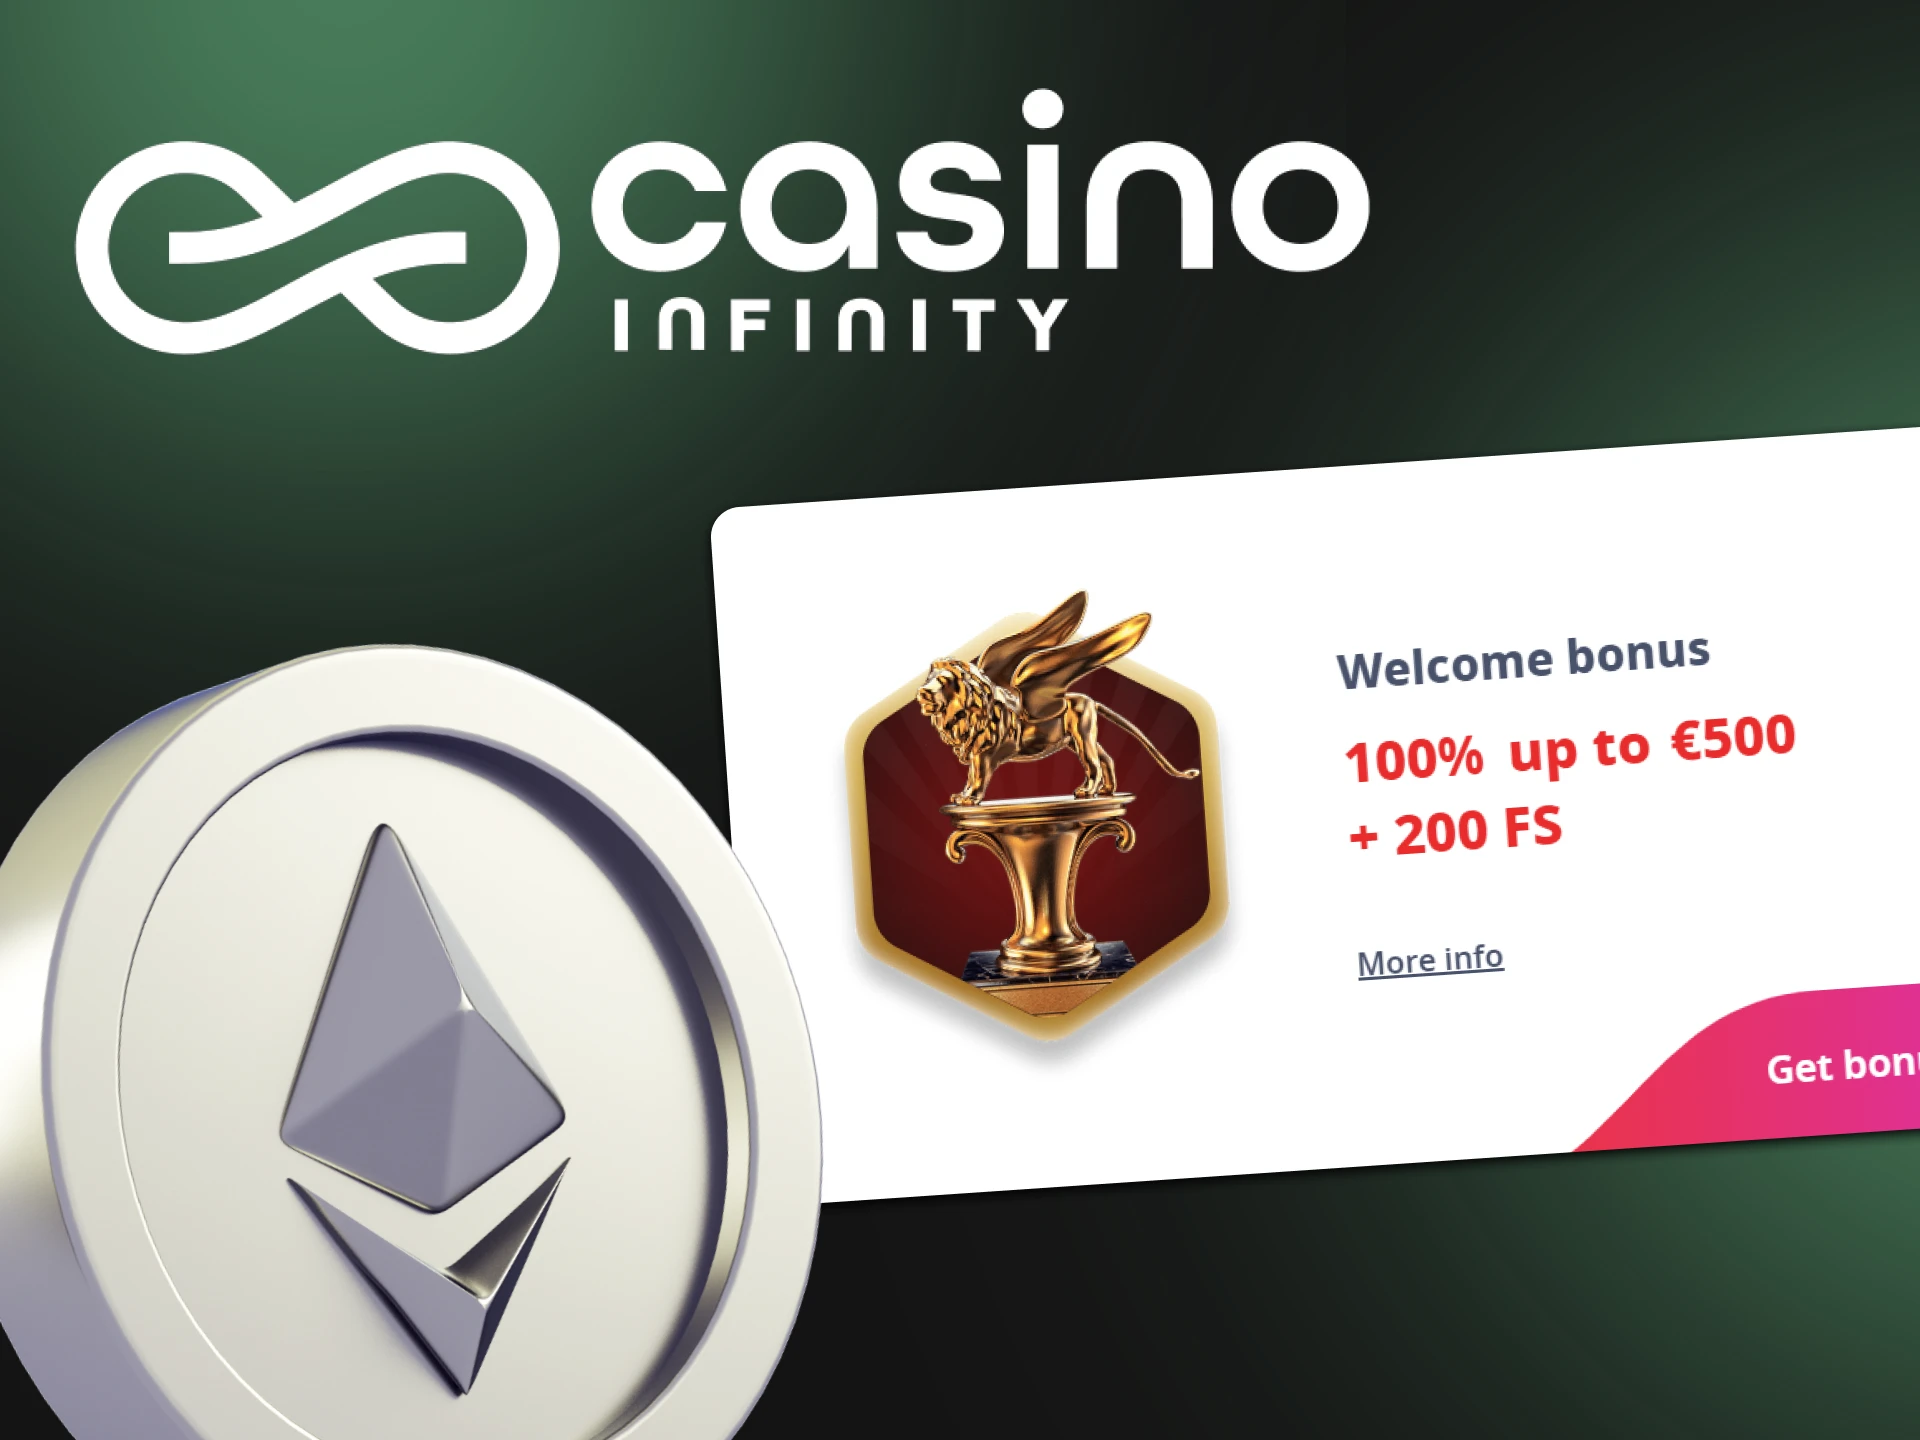 Infinity Casino has a lot of lucrative bonuses.